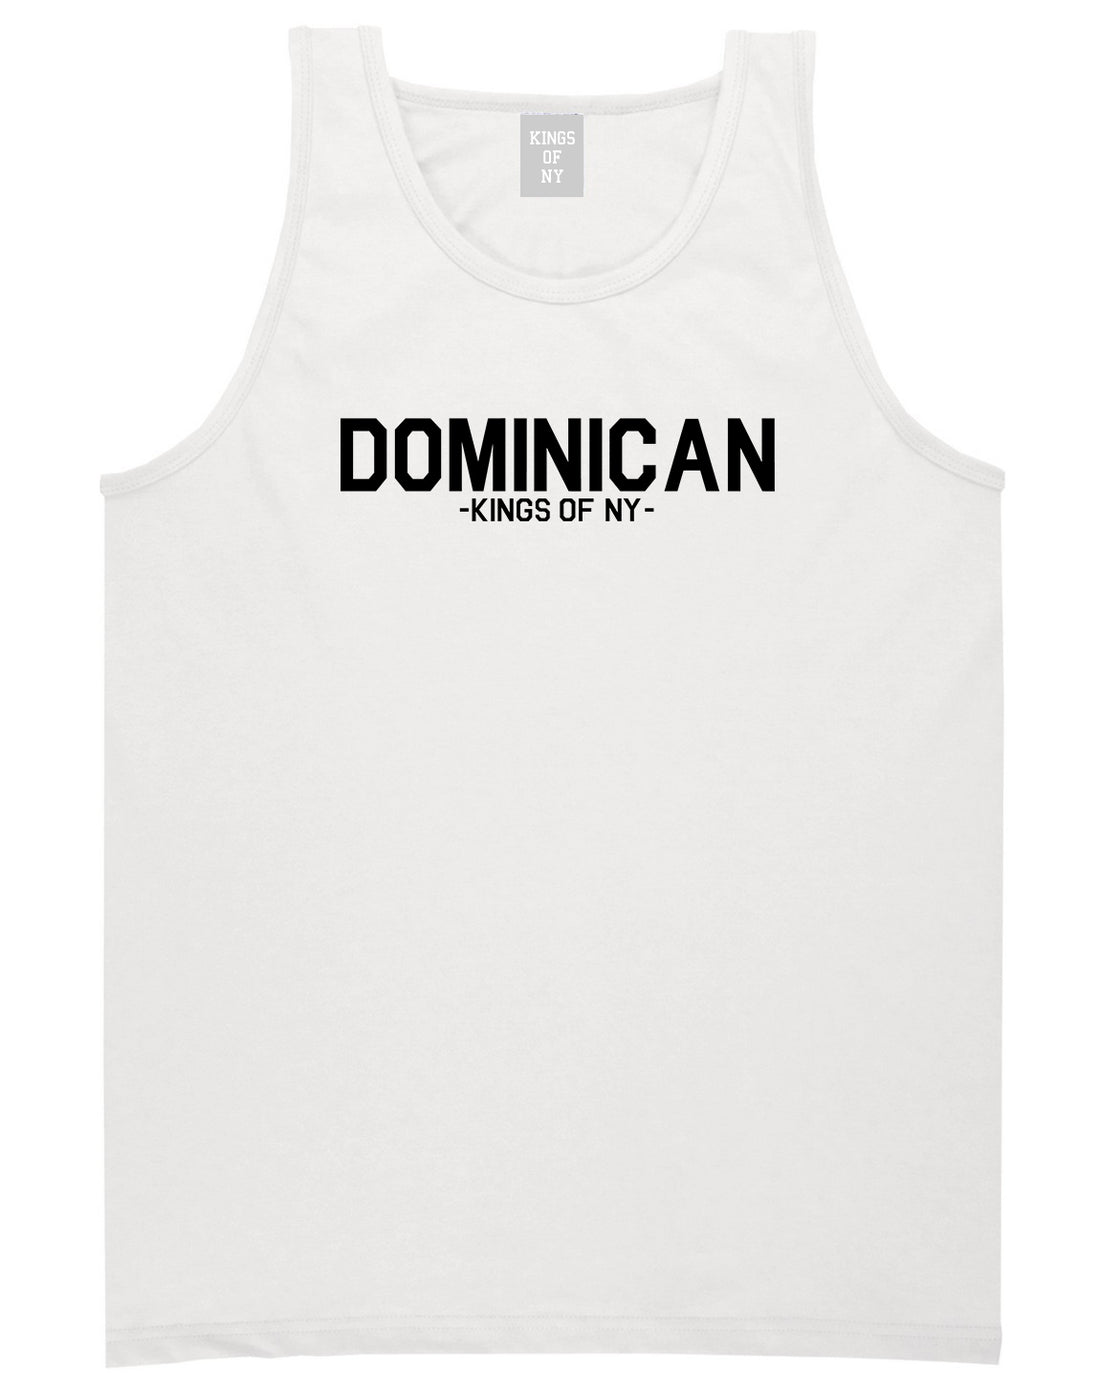 Dominican Kings Of NY Mens Tank Top Shirt White